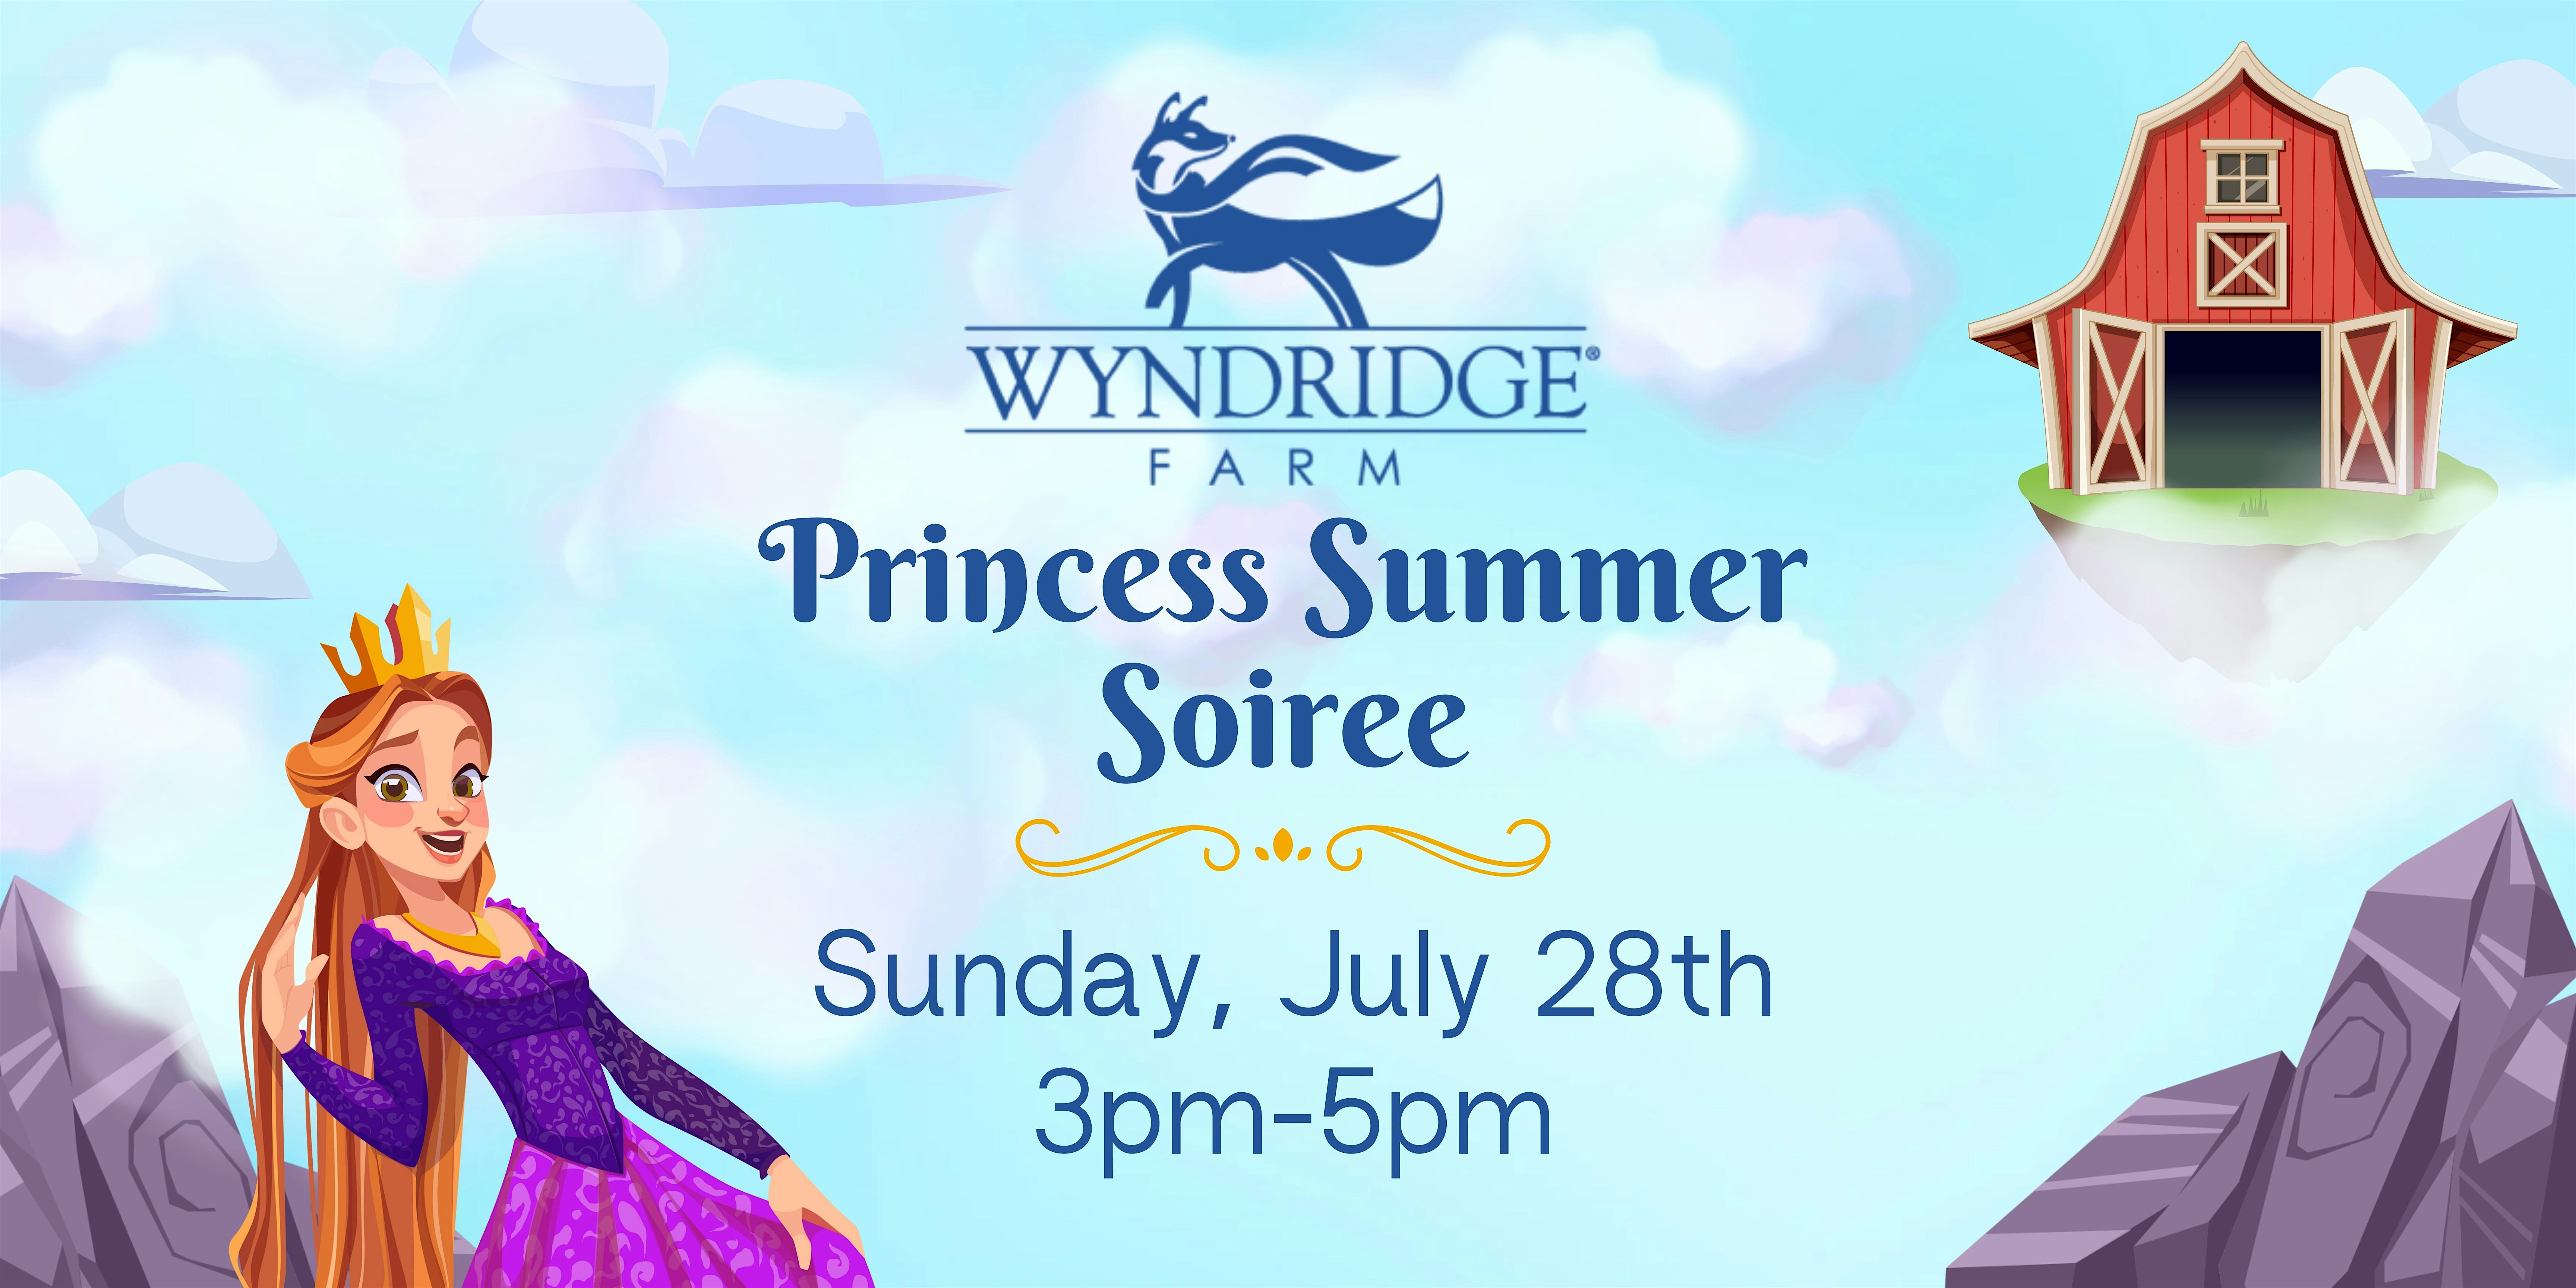 Wyndridge Farm's Summer Princess Soiree